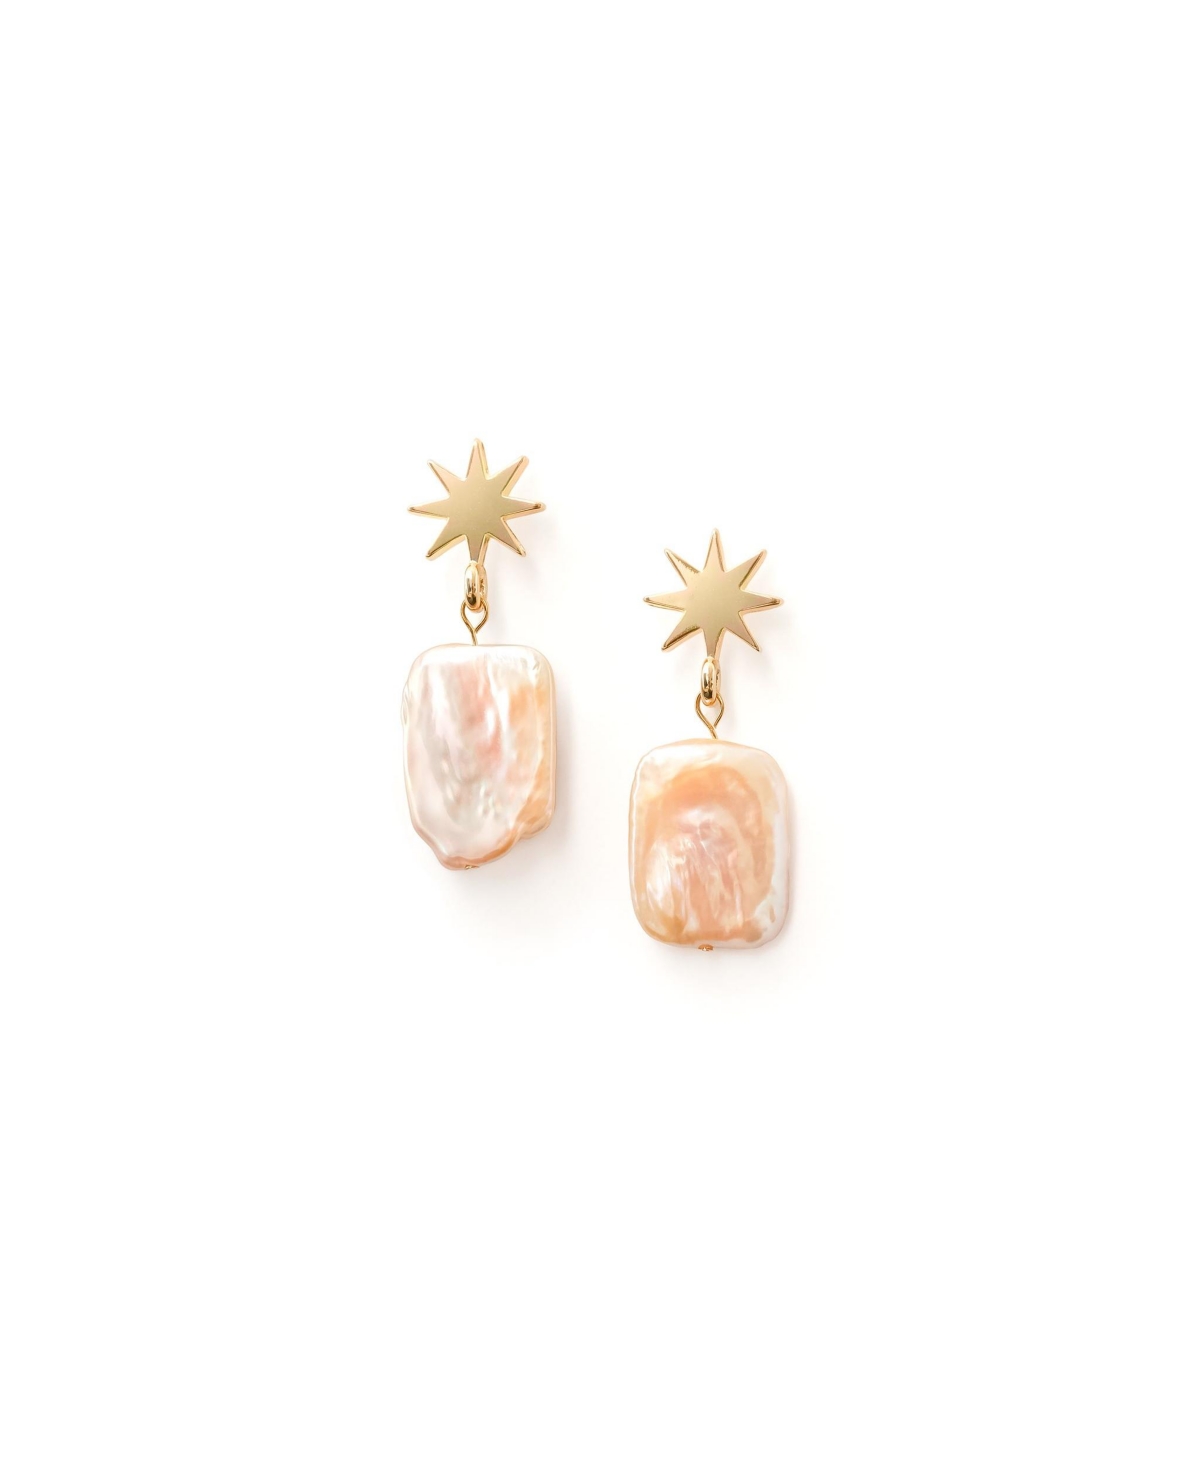 Star + Peachy Pearl Earrings - Light Pastel